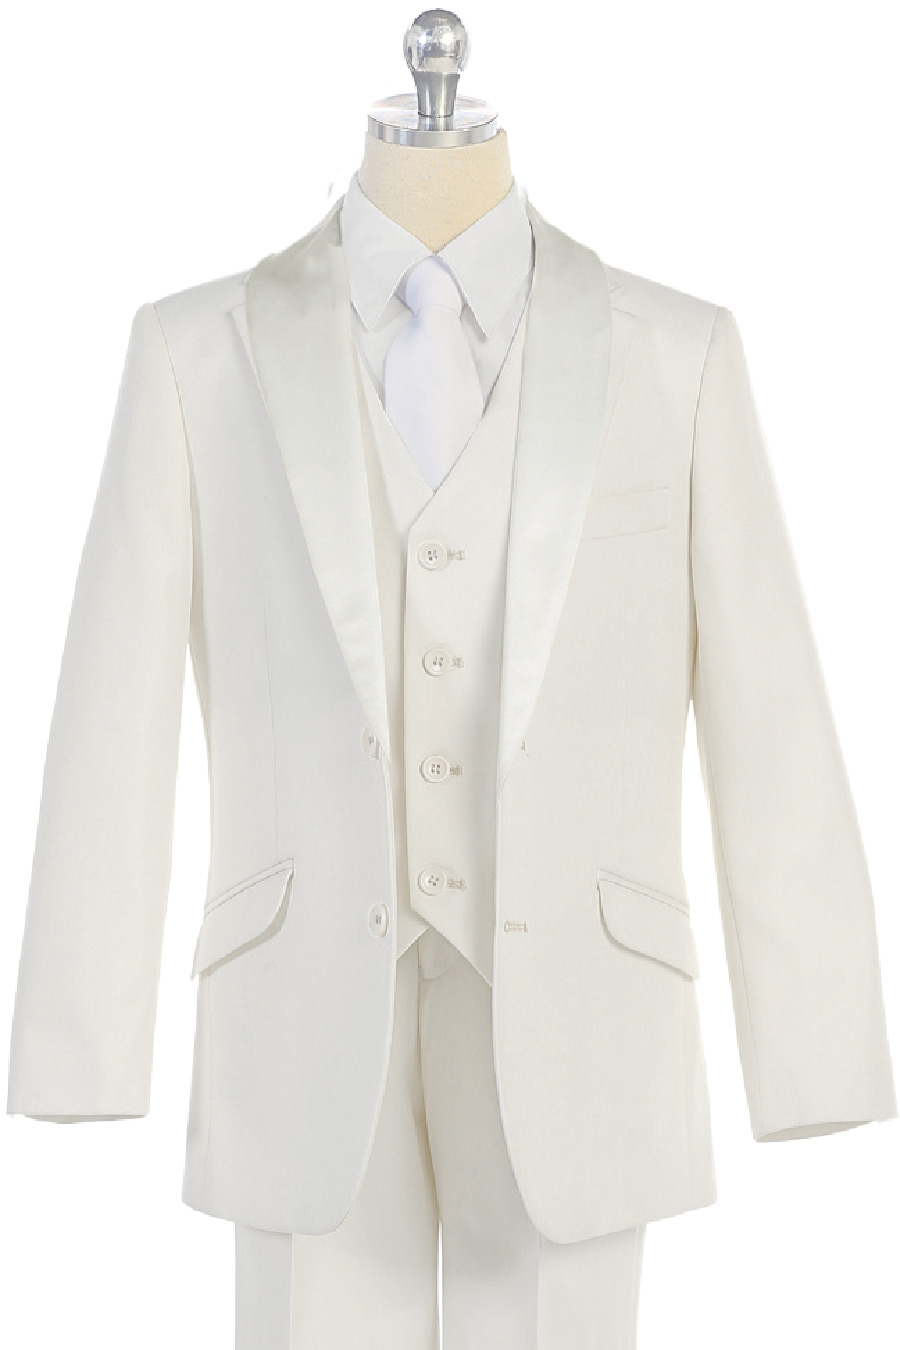 NXB0082-M99 White designer suit with black trims. - BijanKids